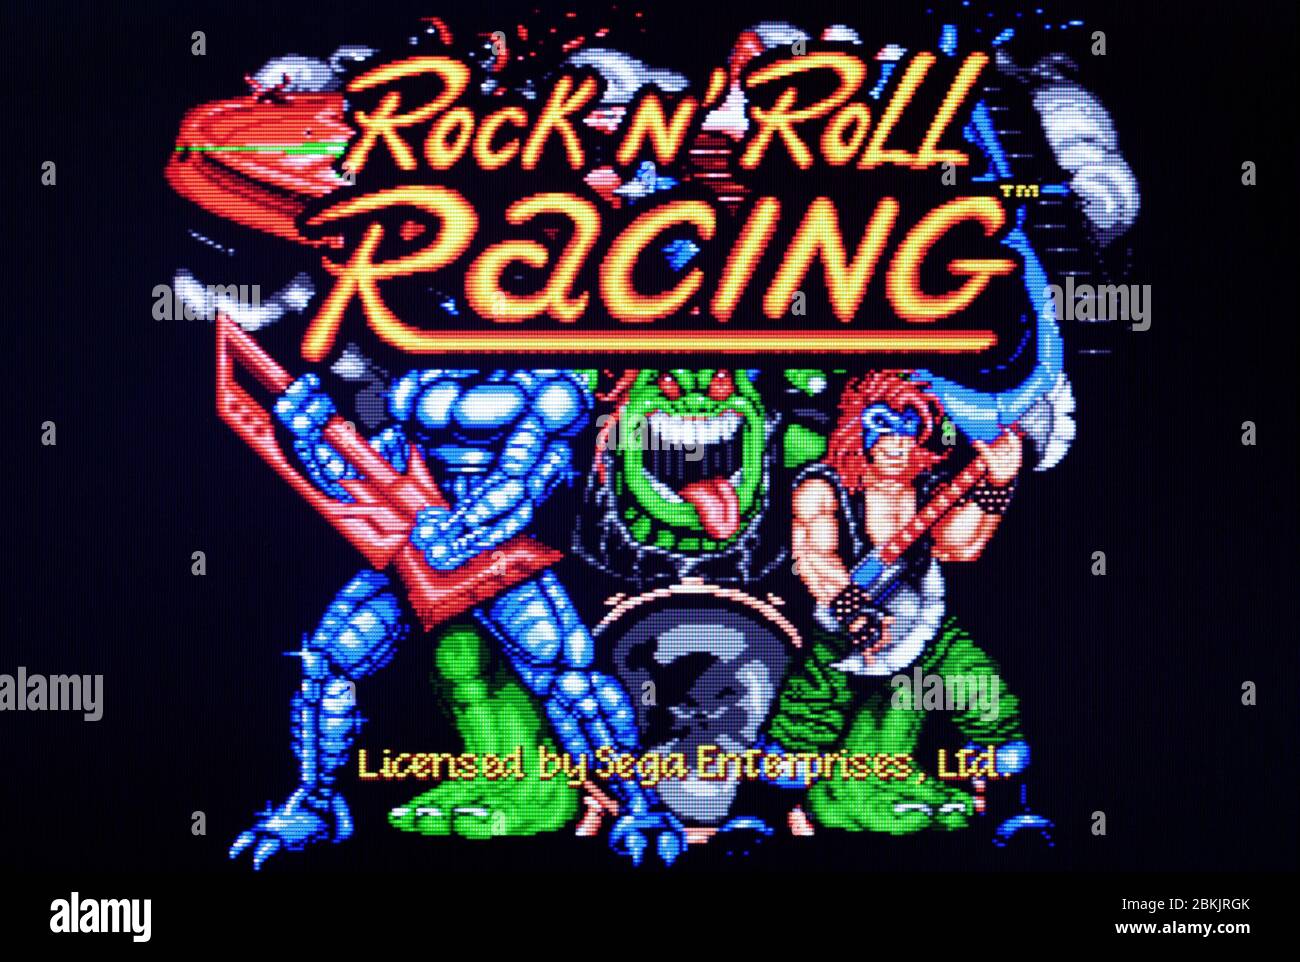 Rock N Roll Racing - Sega Genesis Mega Drive - Editorial use only Stock  Photo - Alamy